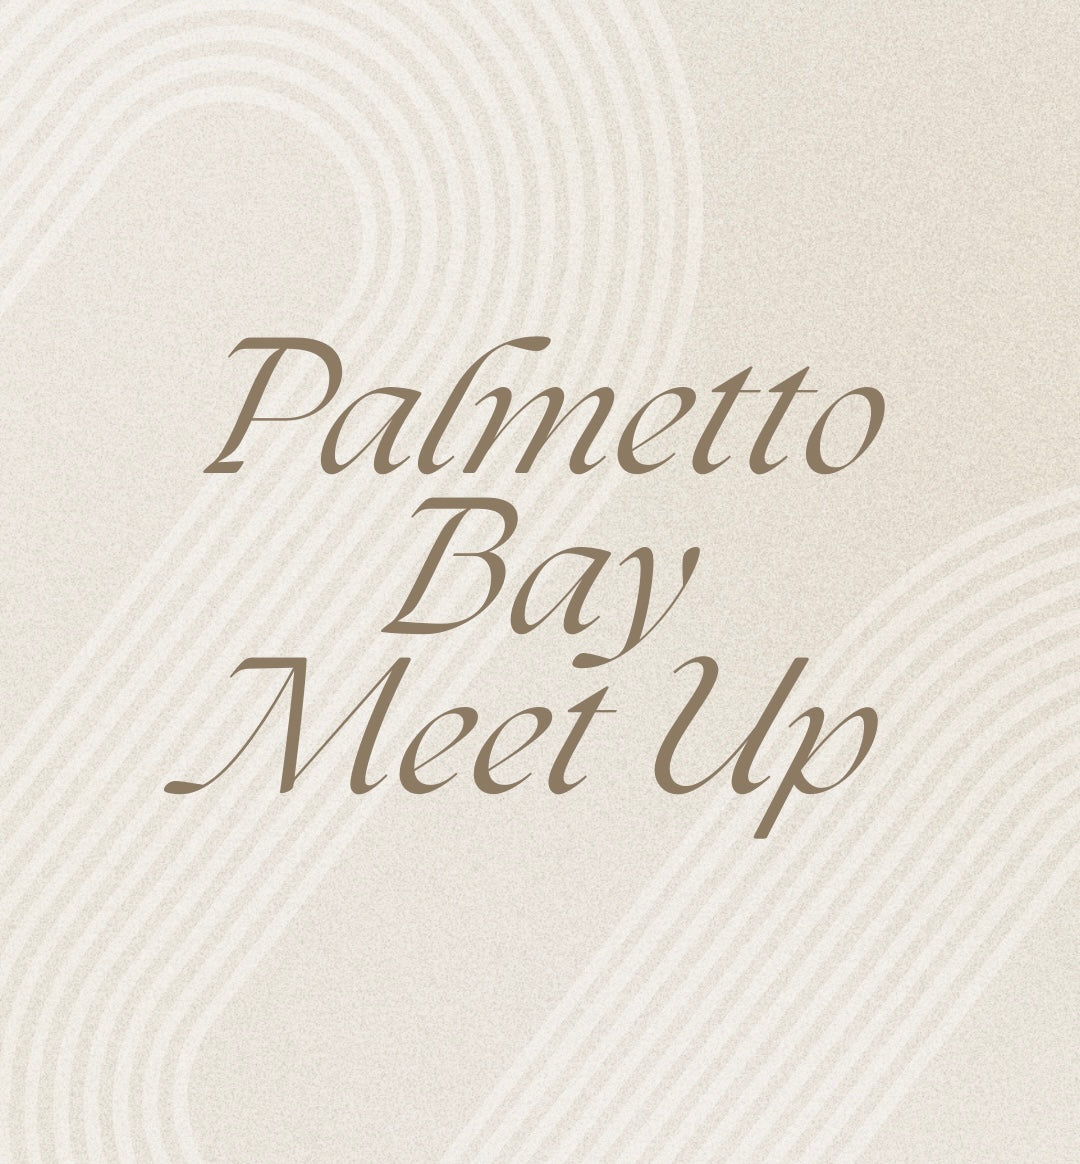 Palmetto Bay Meet Up